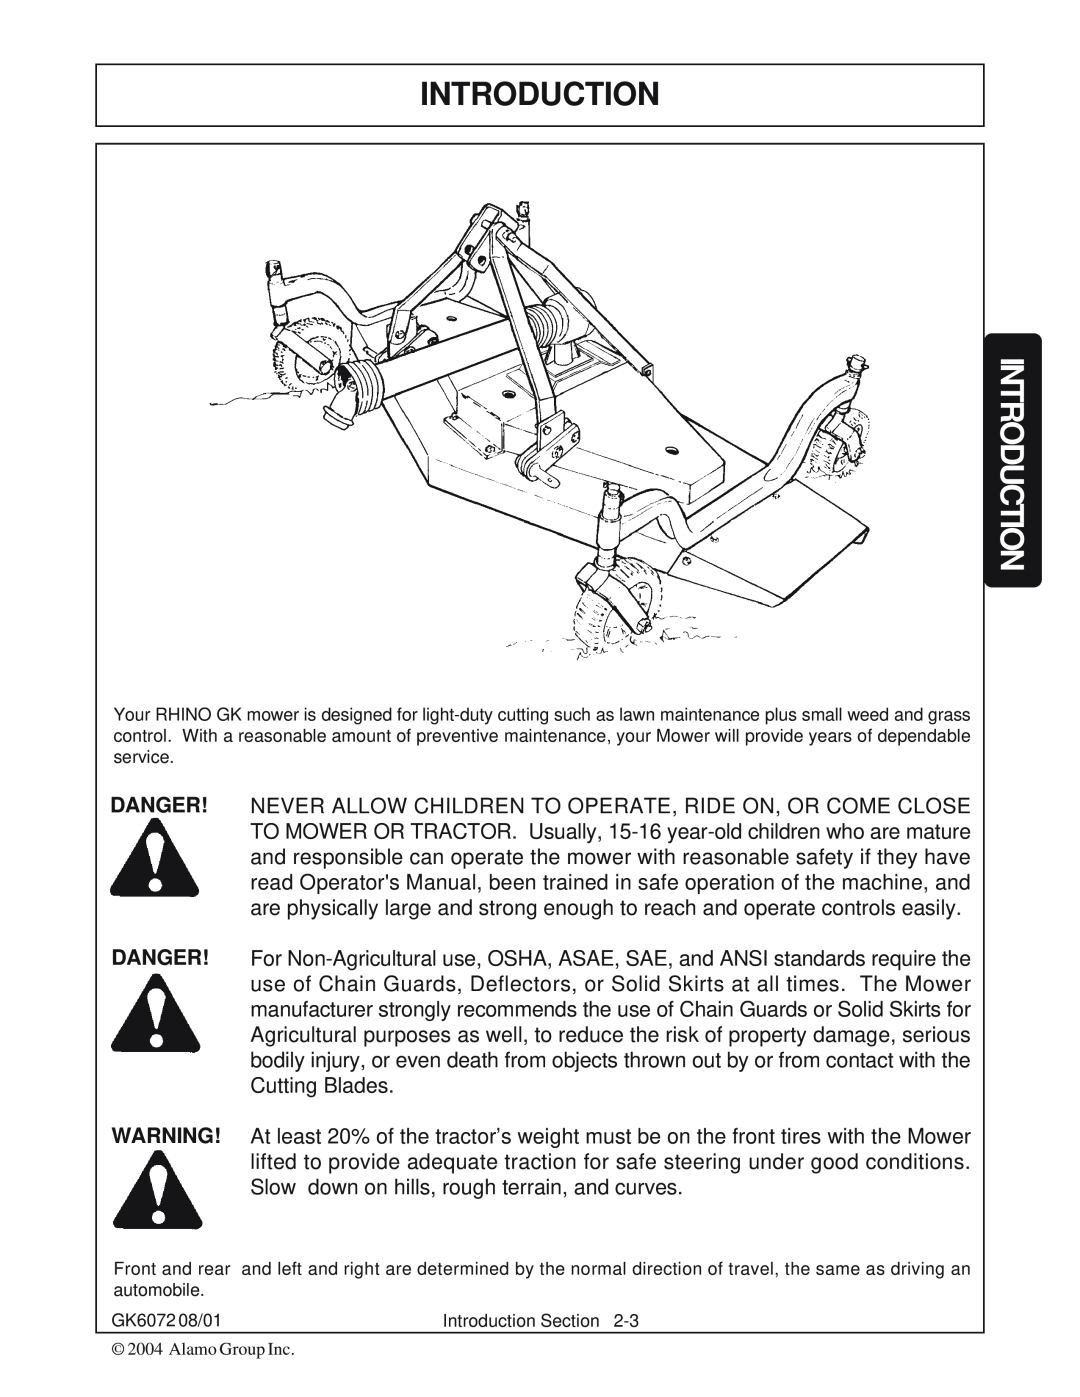 Rhino Mounts manual GK6072 08/01, Introduction Section 